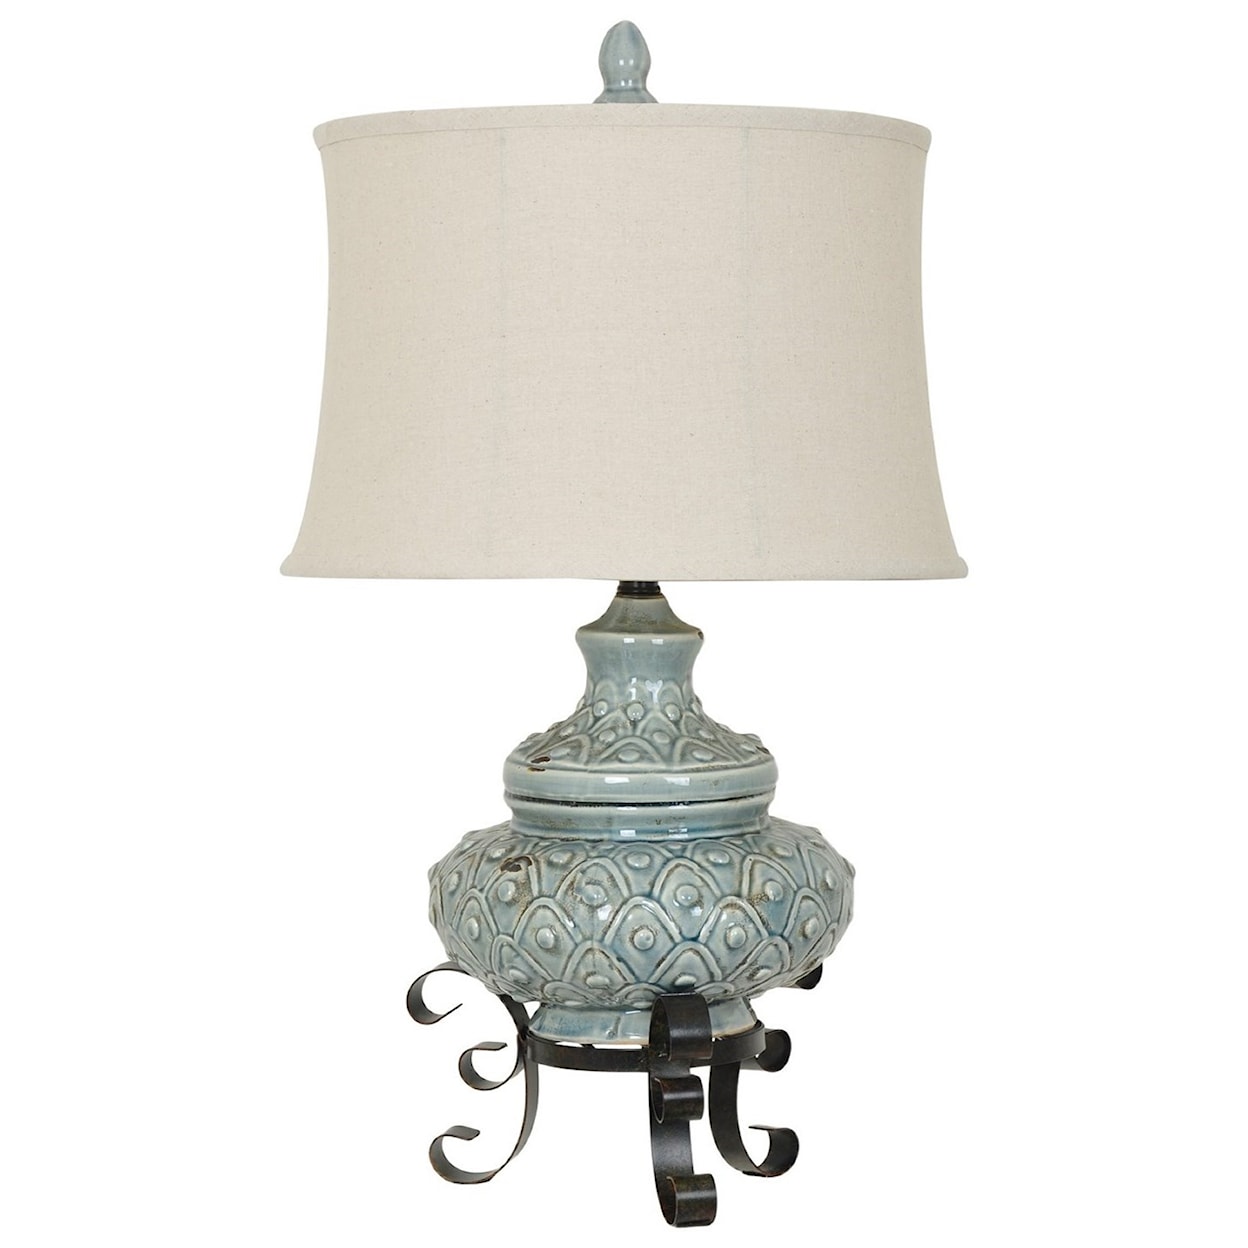 Crestview Collection Lighting Alden Table Lamp